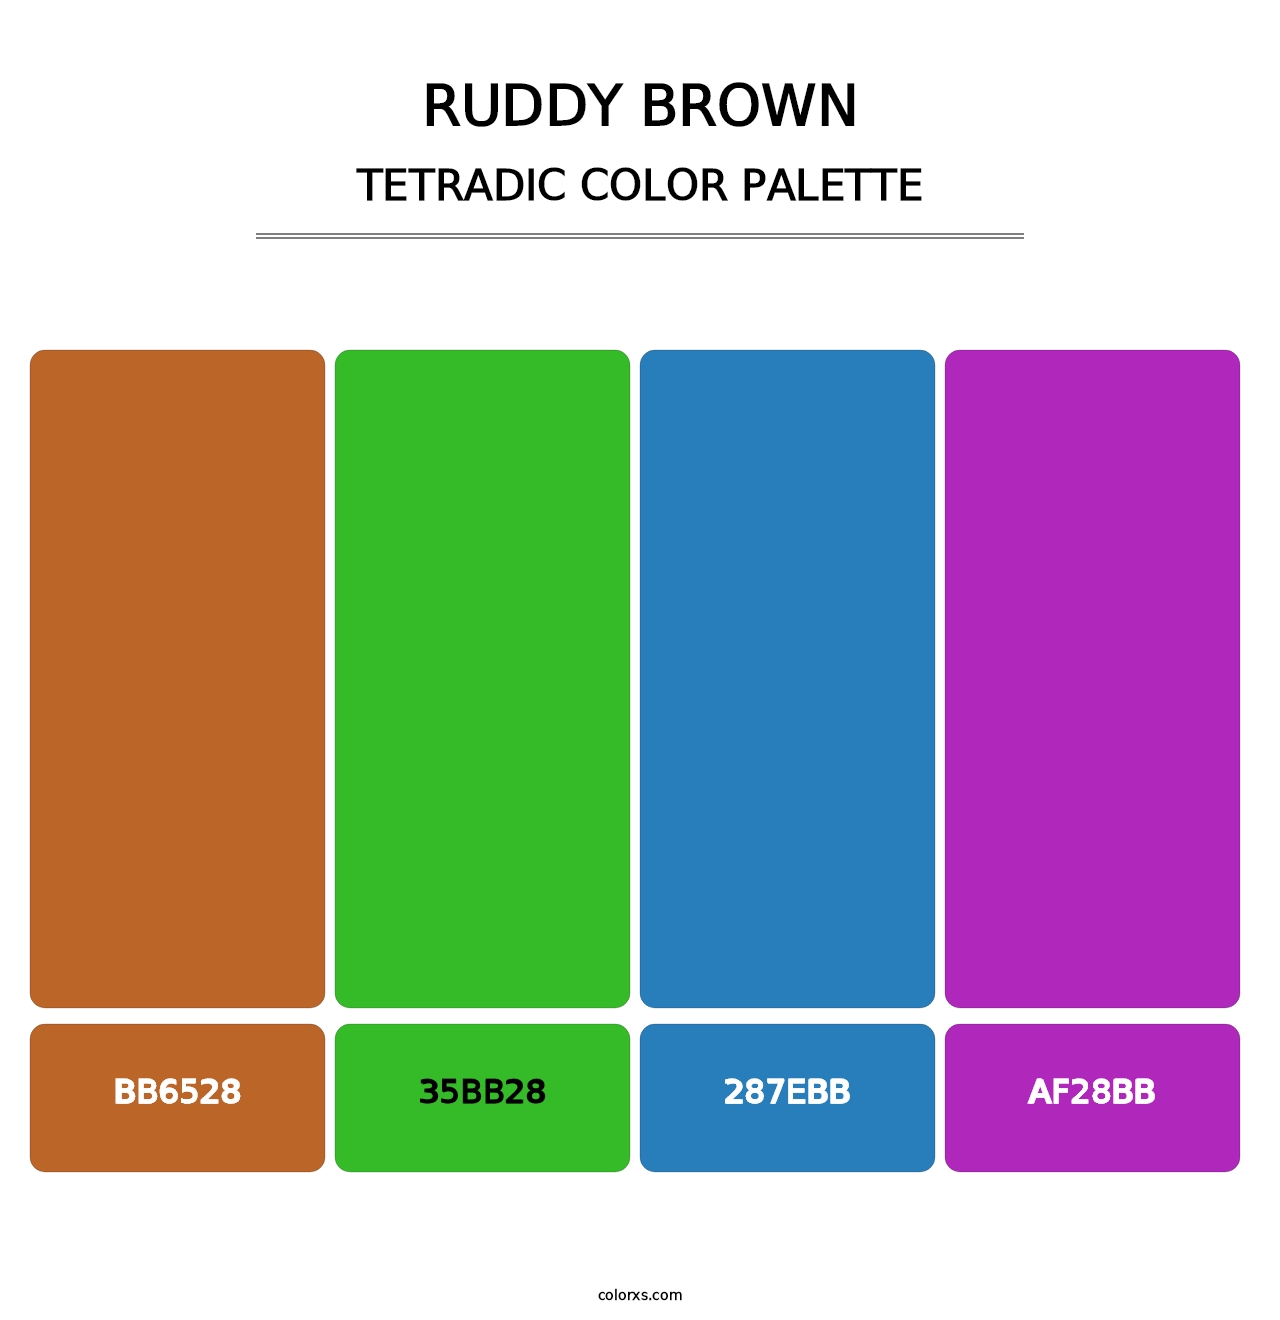 Ruddy Brown - Tetradic Color Palette